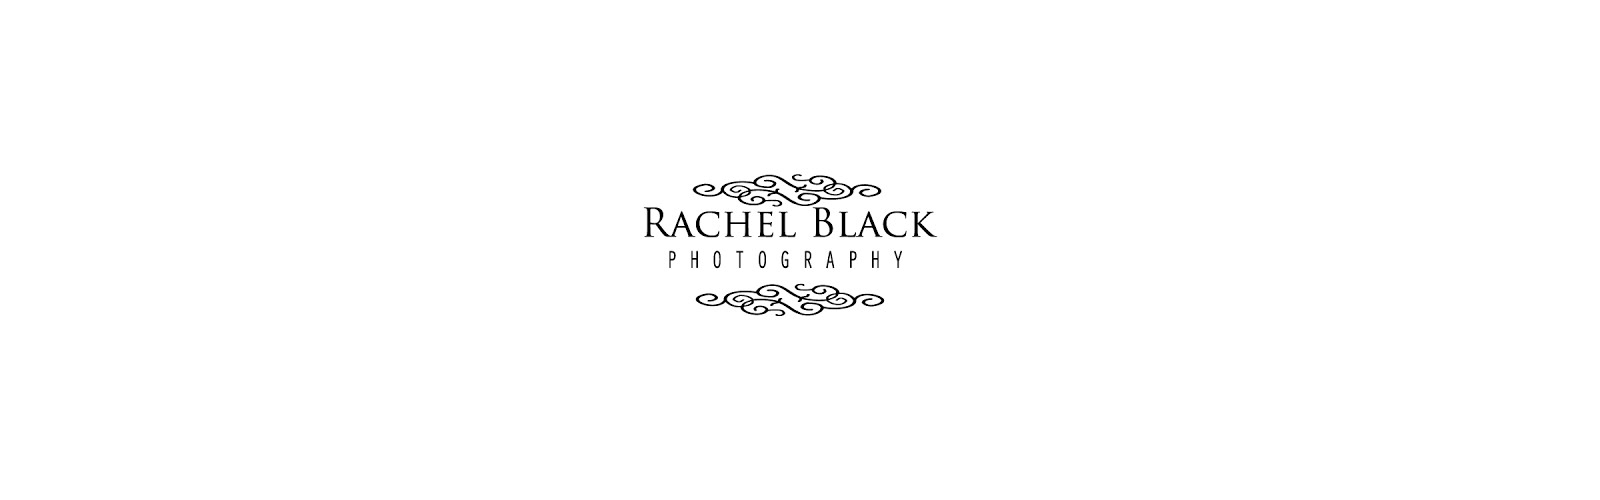 Rachel Black Photography